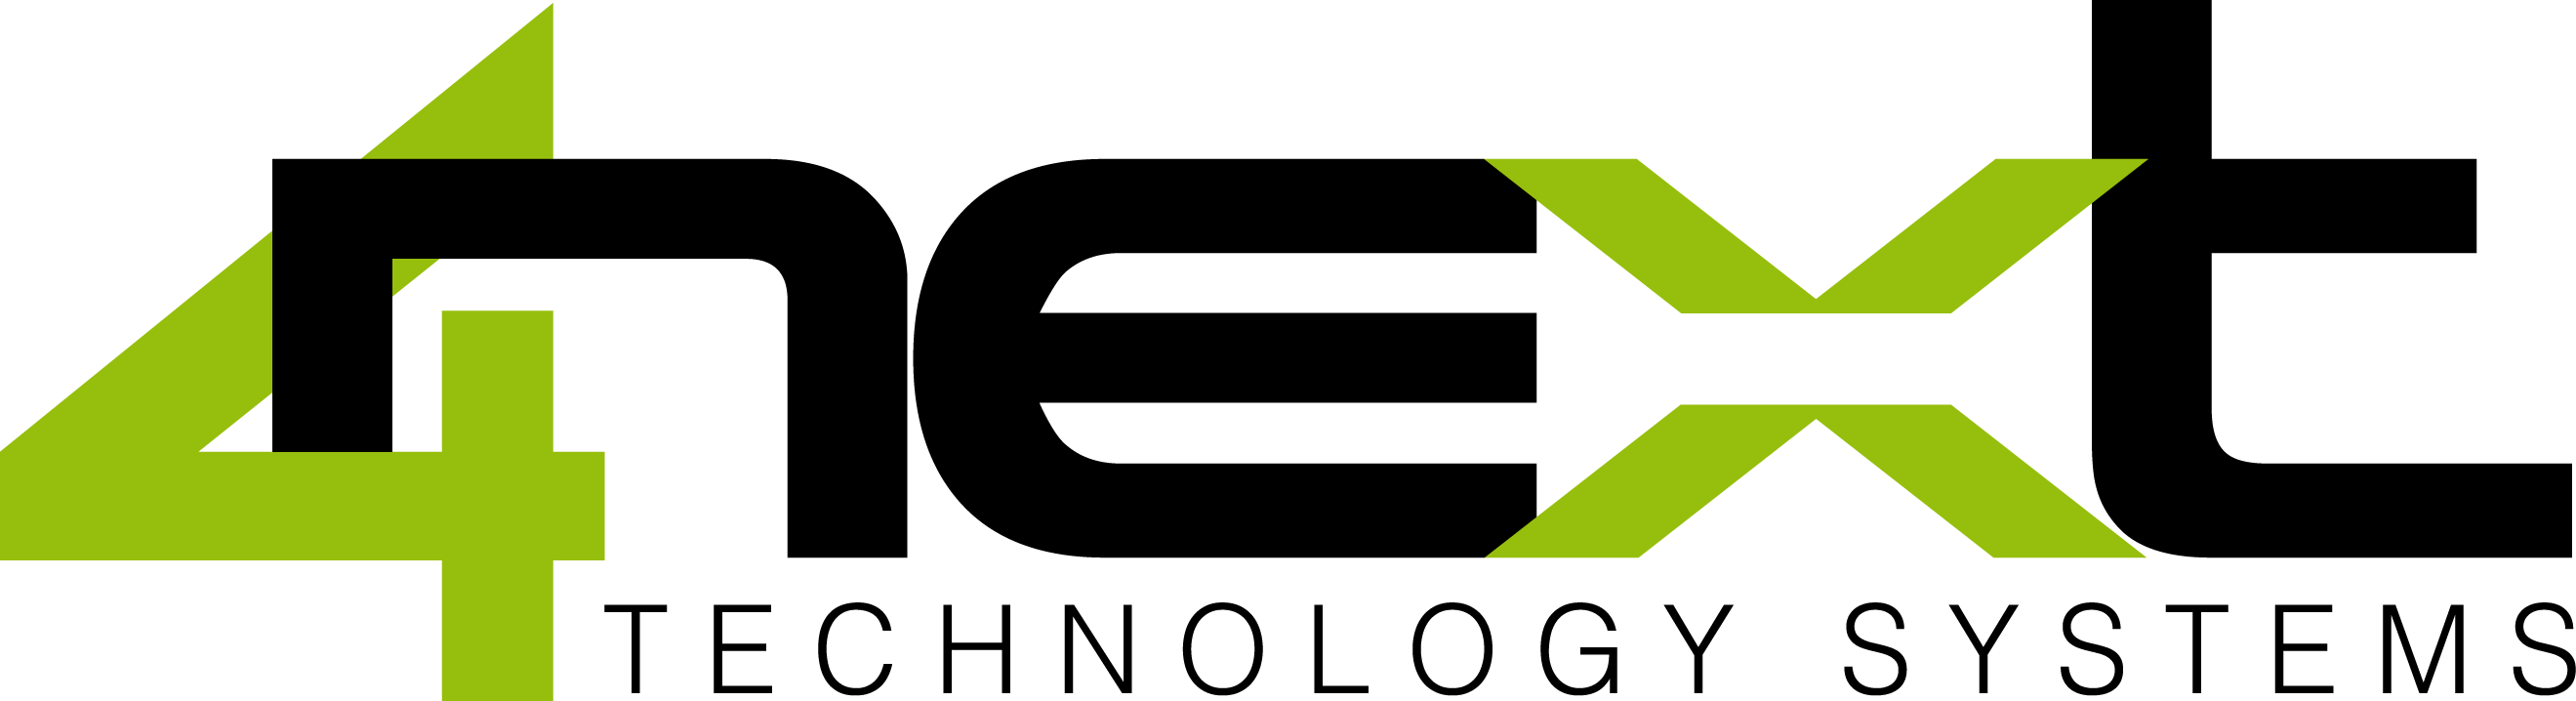 4neXt logo